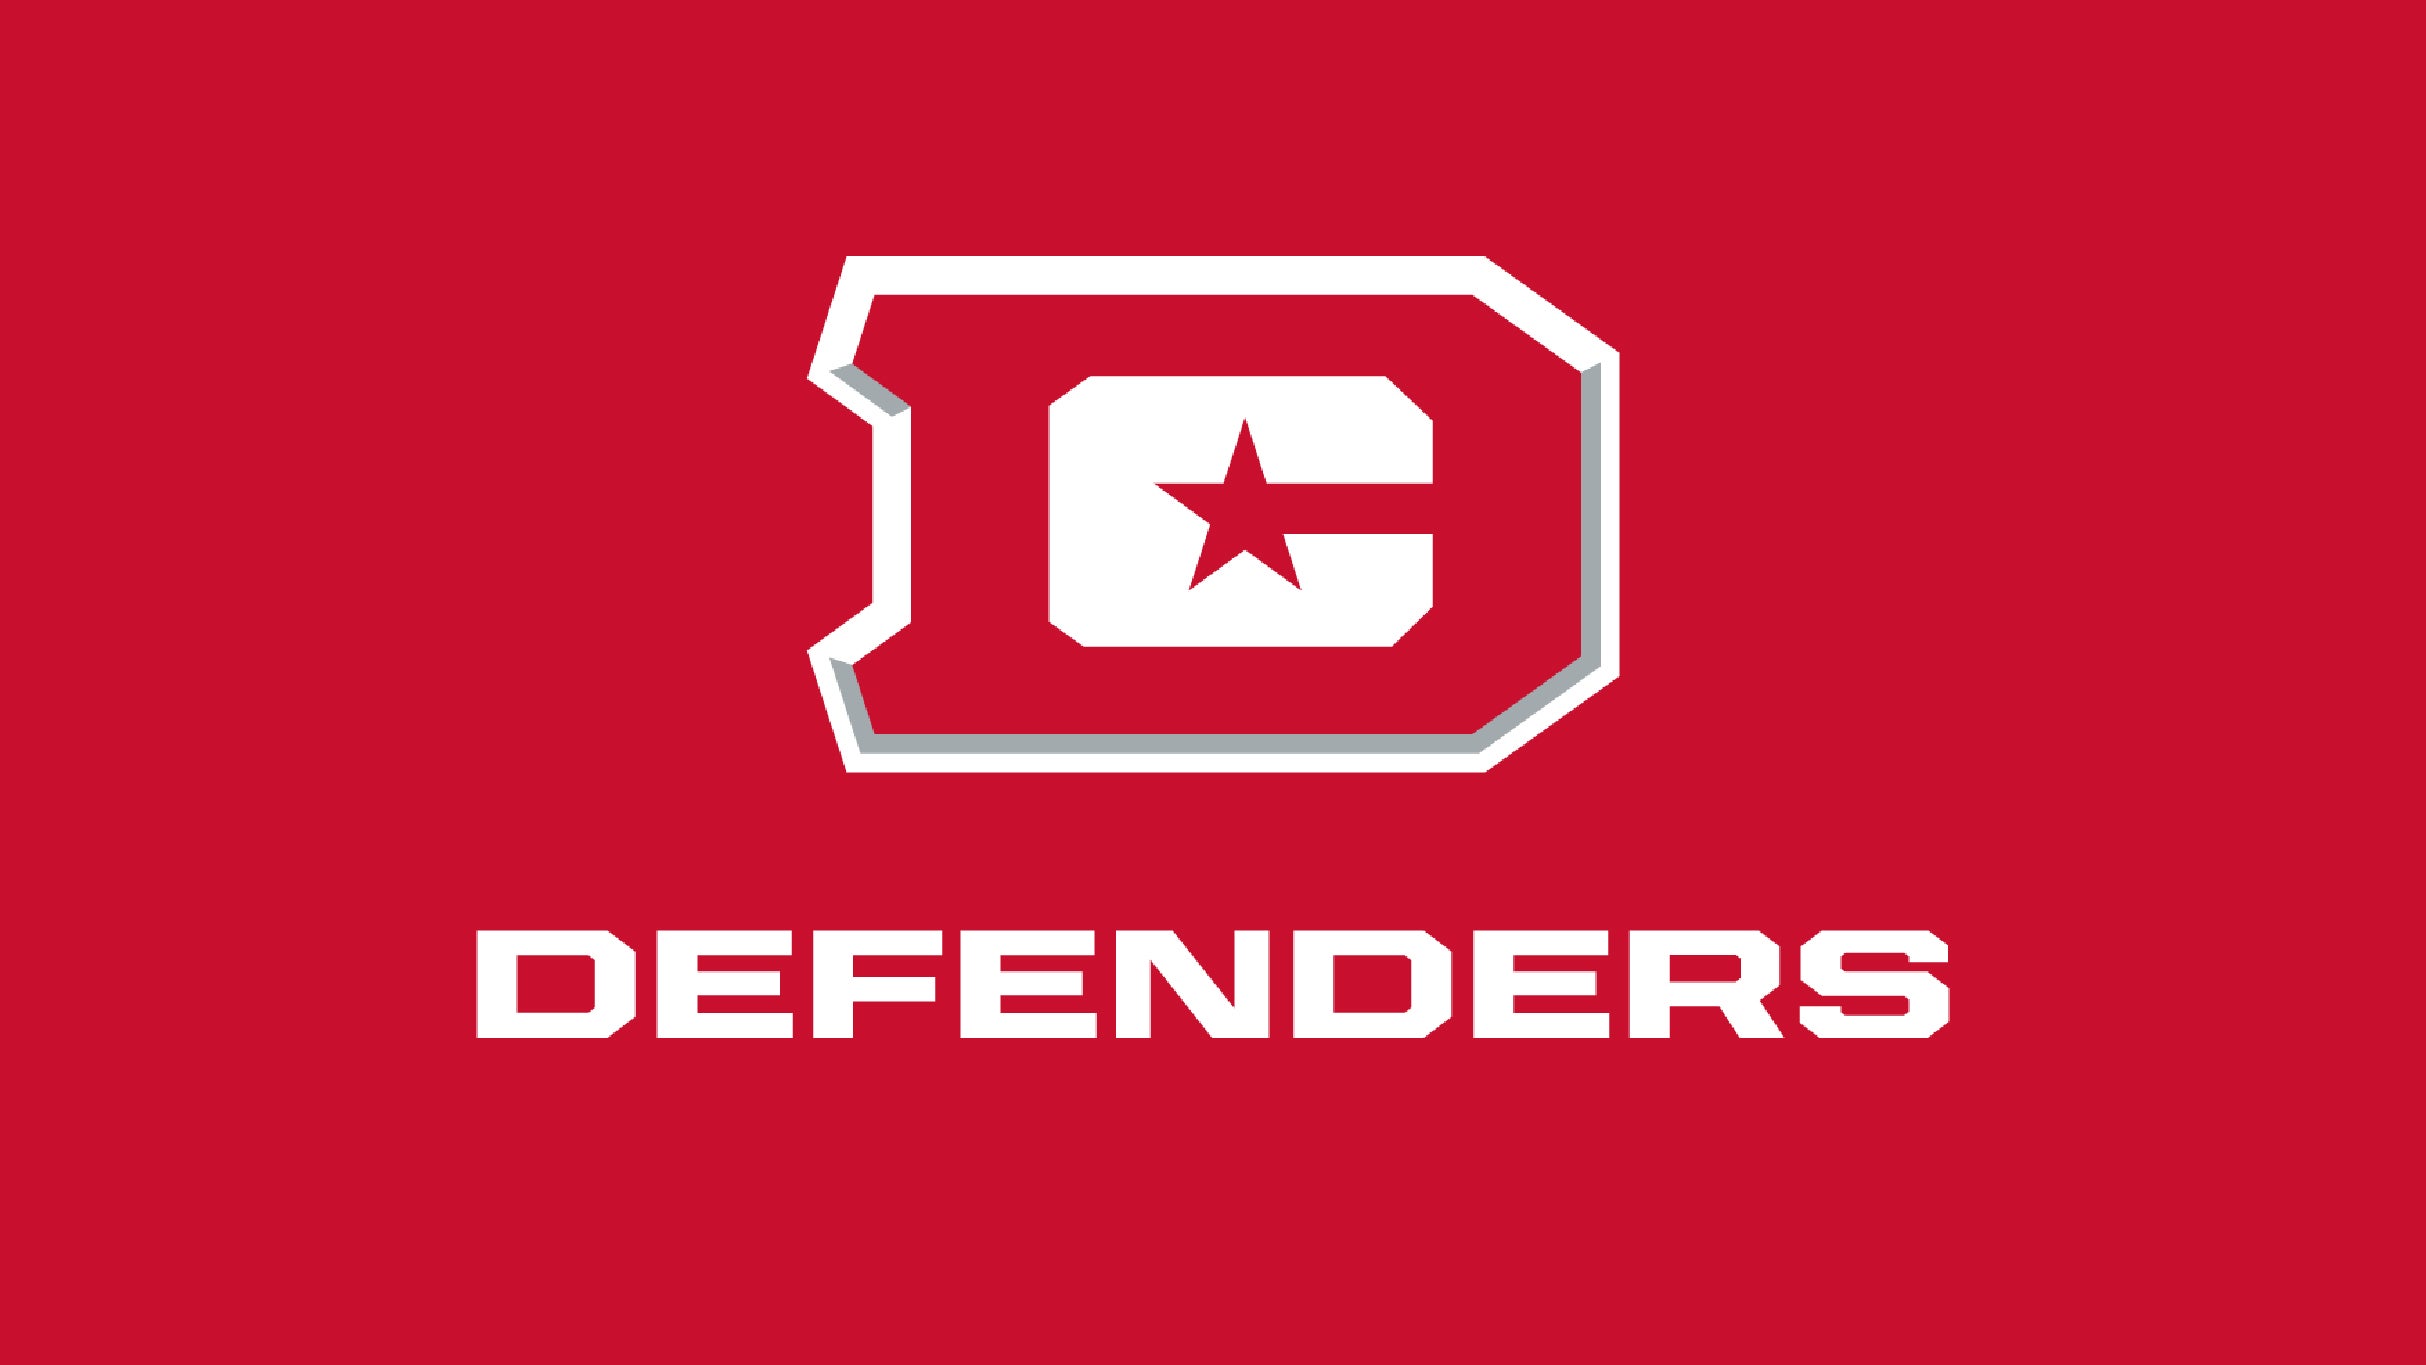 DC Defenders vs. Houston Roughnecks free presale code for show tickets in Washington, DC (Audi Field)